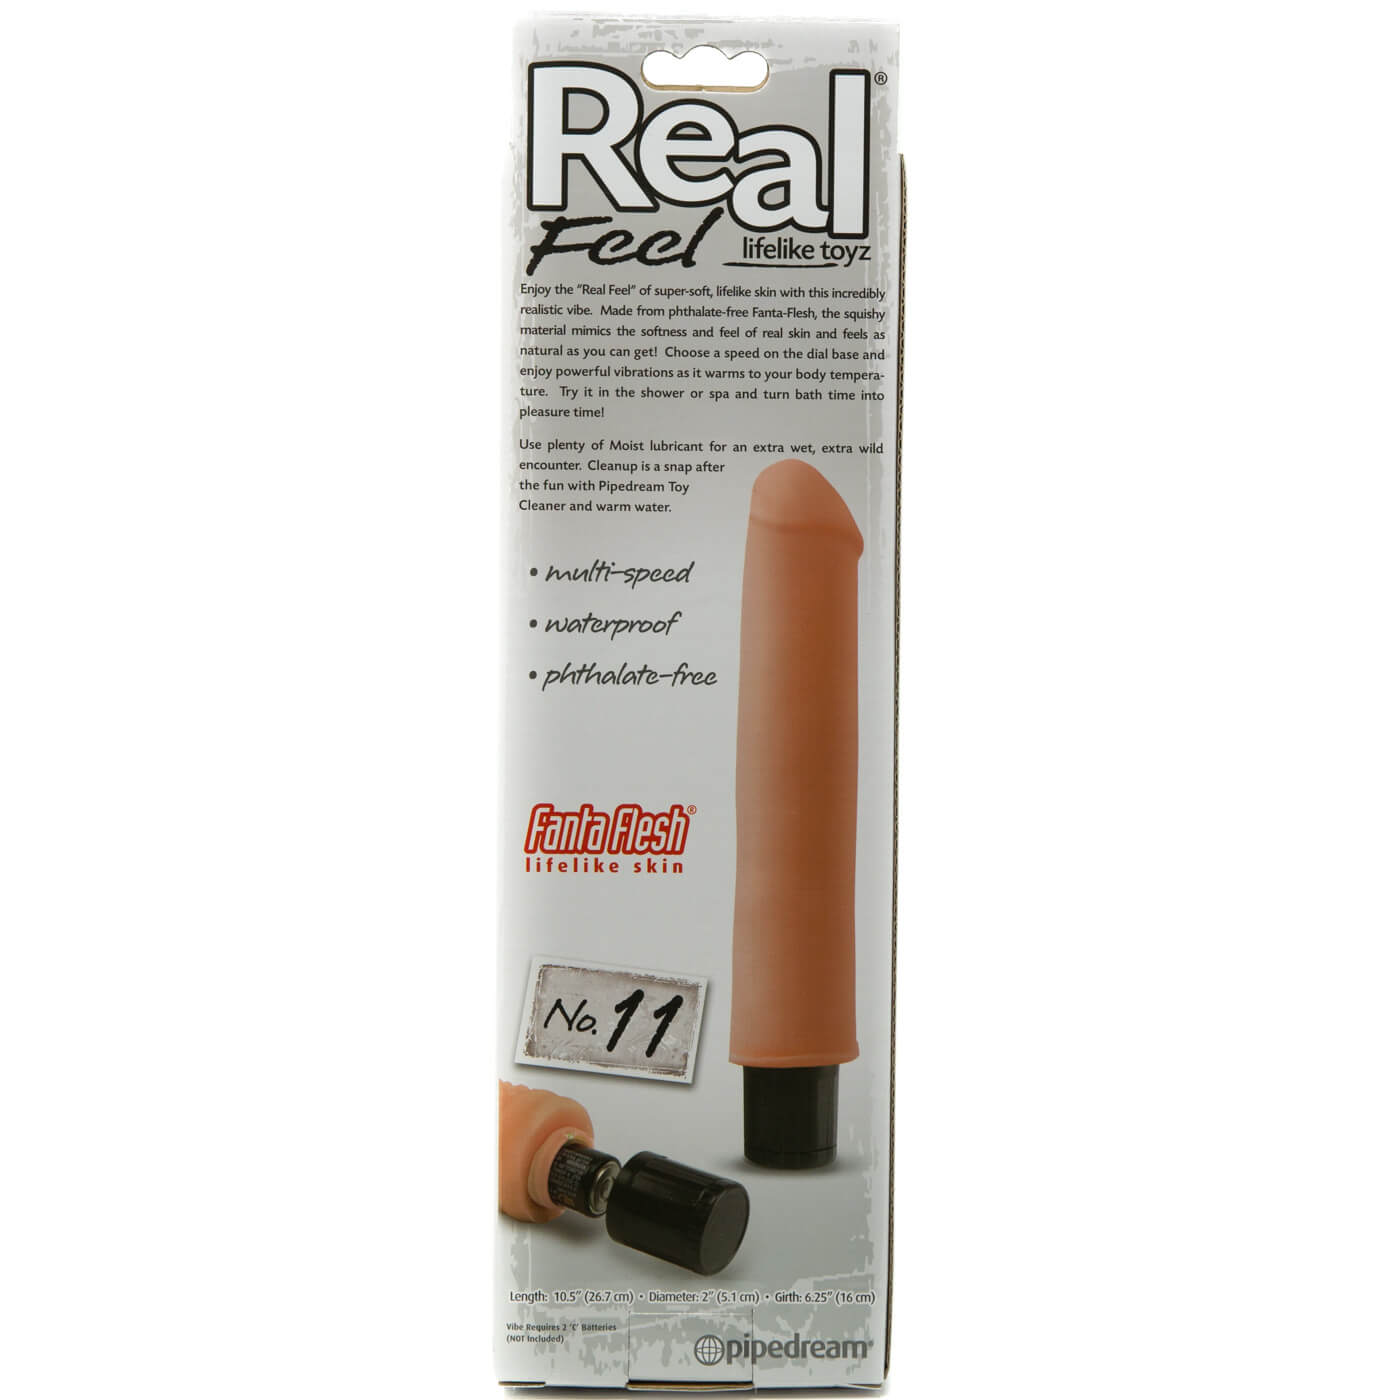 Real Feel No.11 Waterproof 11 Inch Realistic Dildo Vibrator